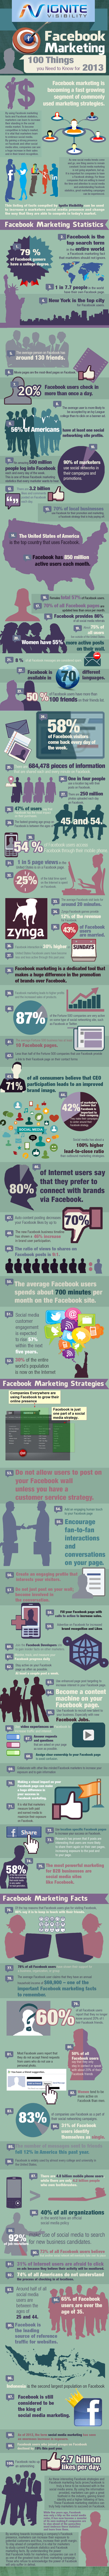 Facebook Marketing Infographic Statistics 